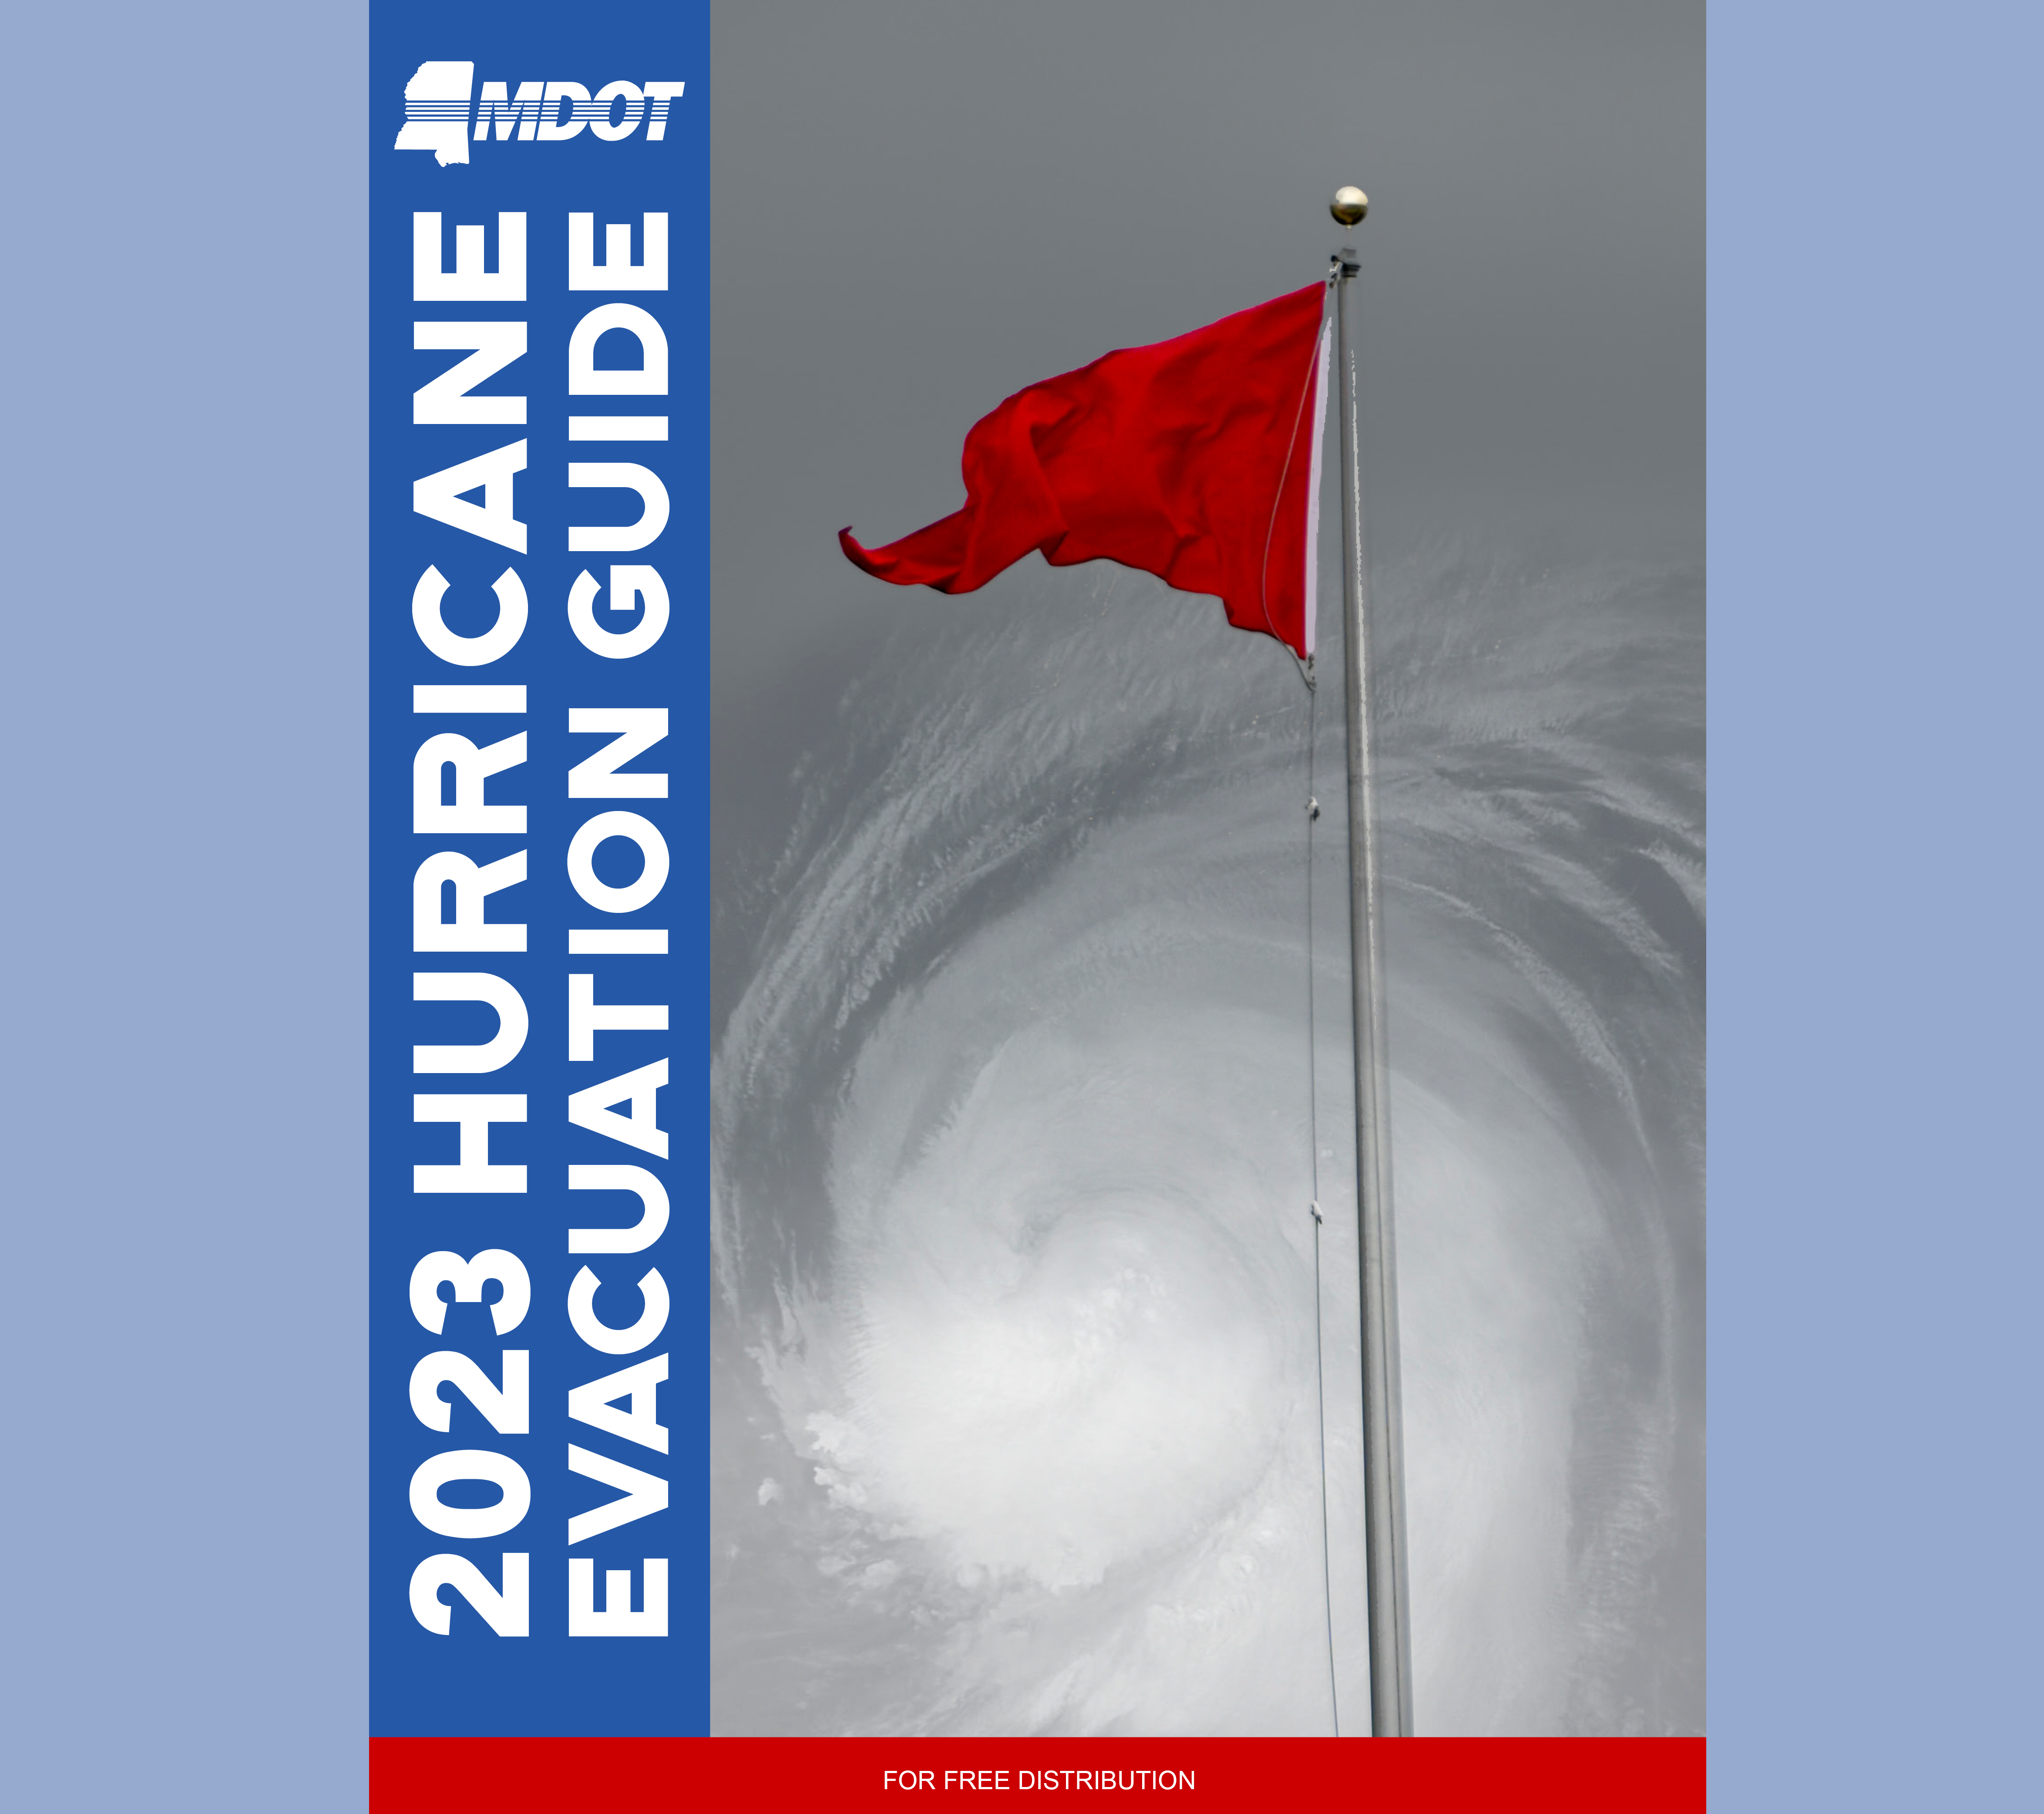 2023 Hurricane Guide